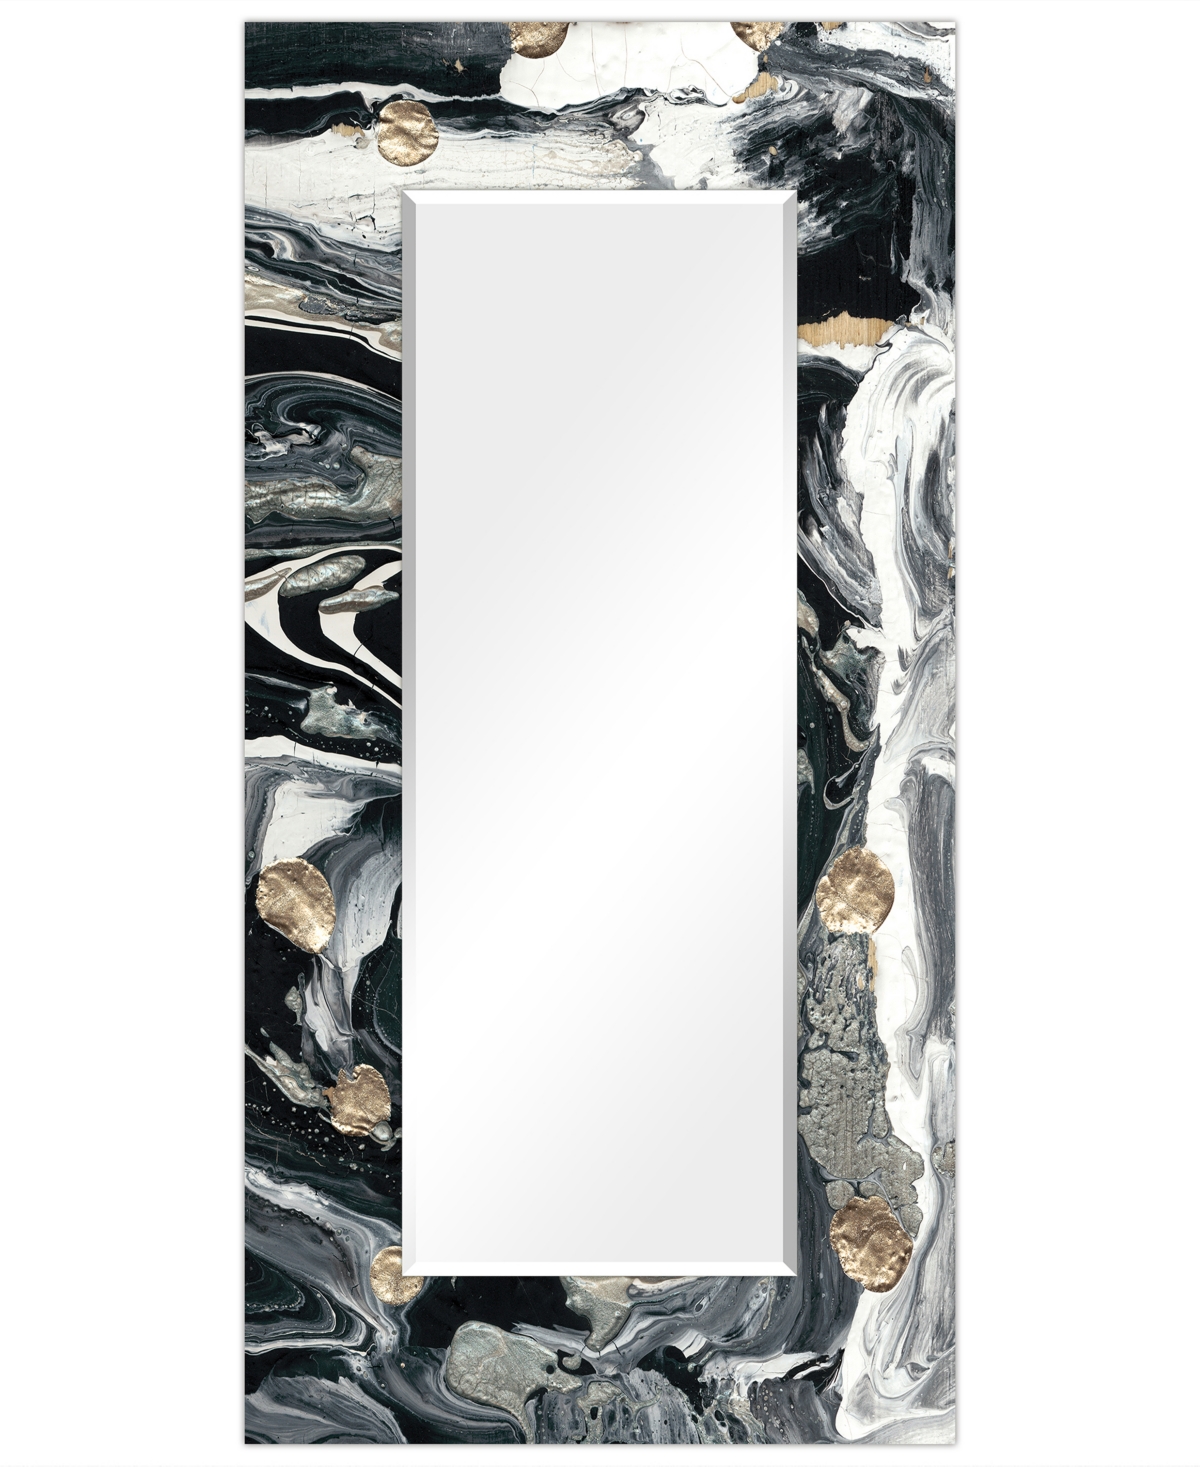 'Ebony' Rectangular On Free Floating Printed Tempered Art Glass Beveled Mirror, 72" x 36" - Black, Gold-Tone